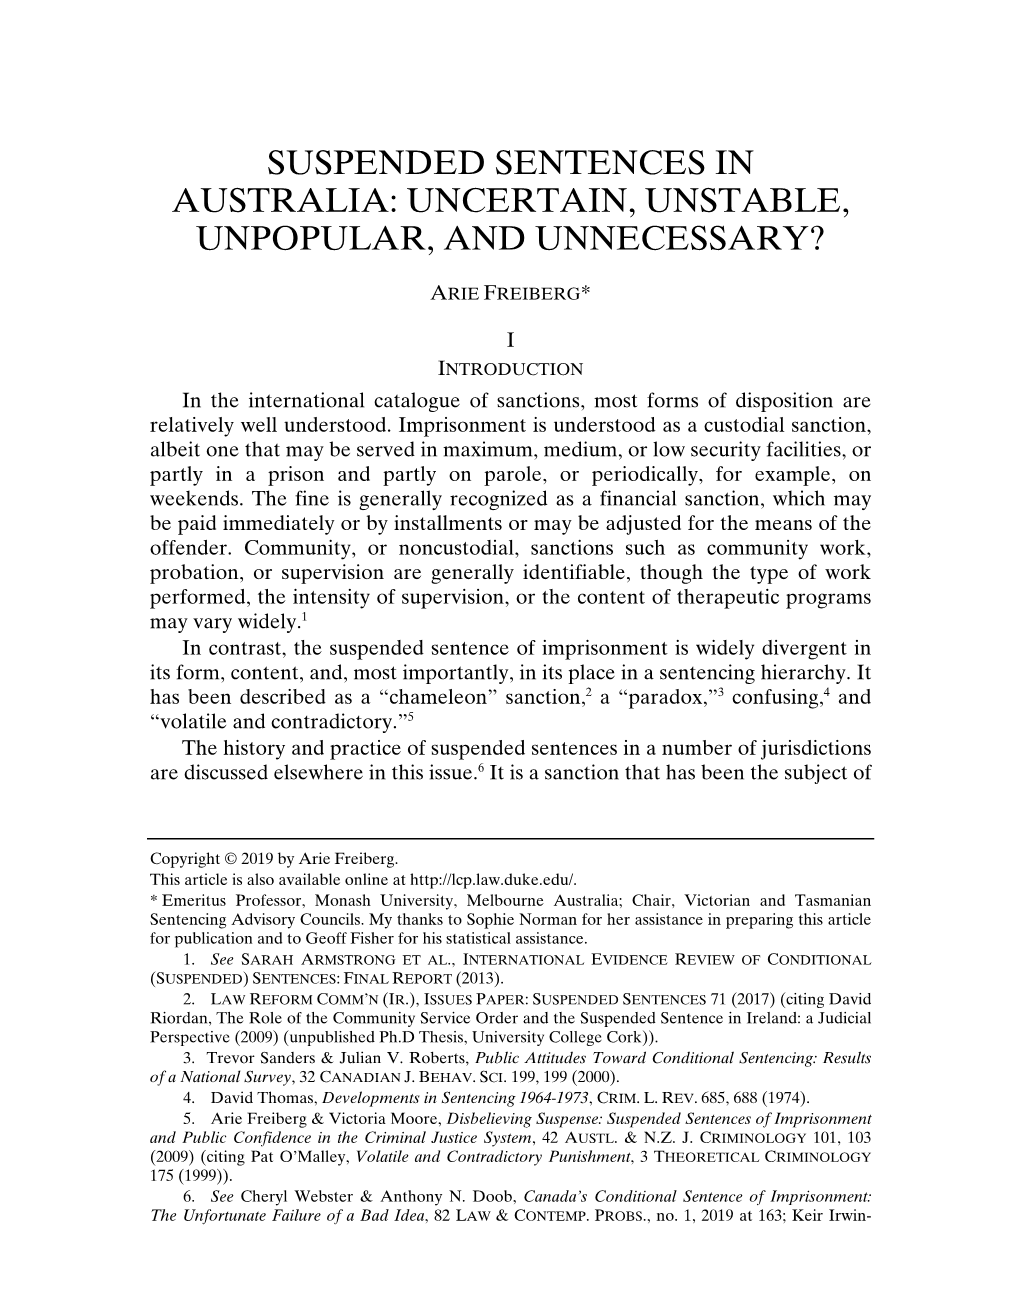 Suspended Sentences in Australia: Uncertain, Unstable, Unpopular, and Unnecessary?